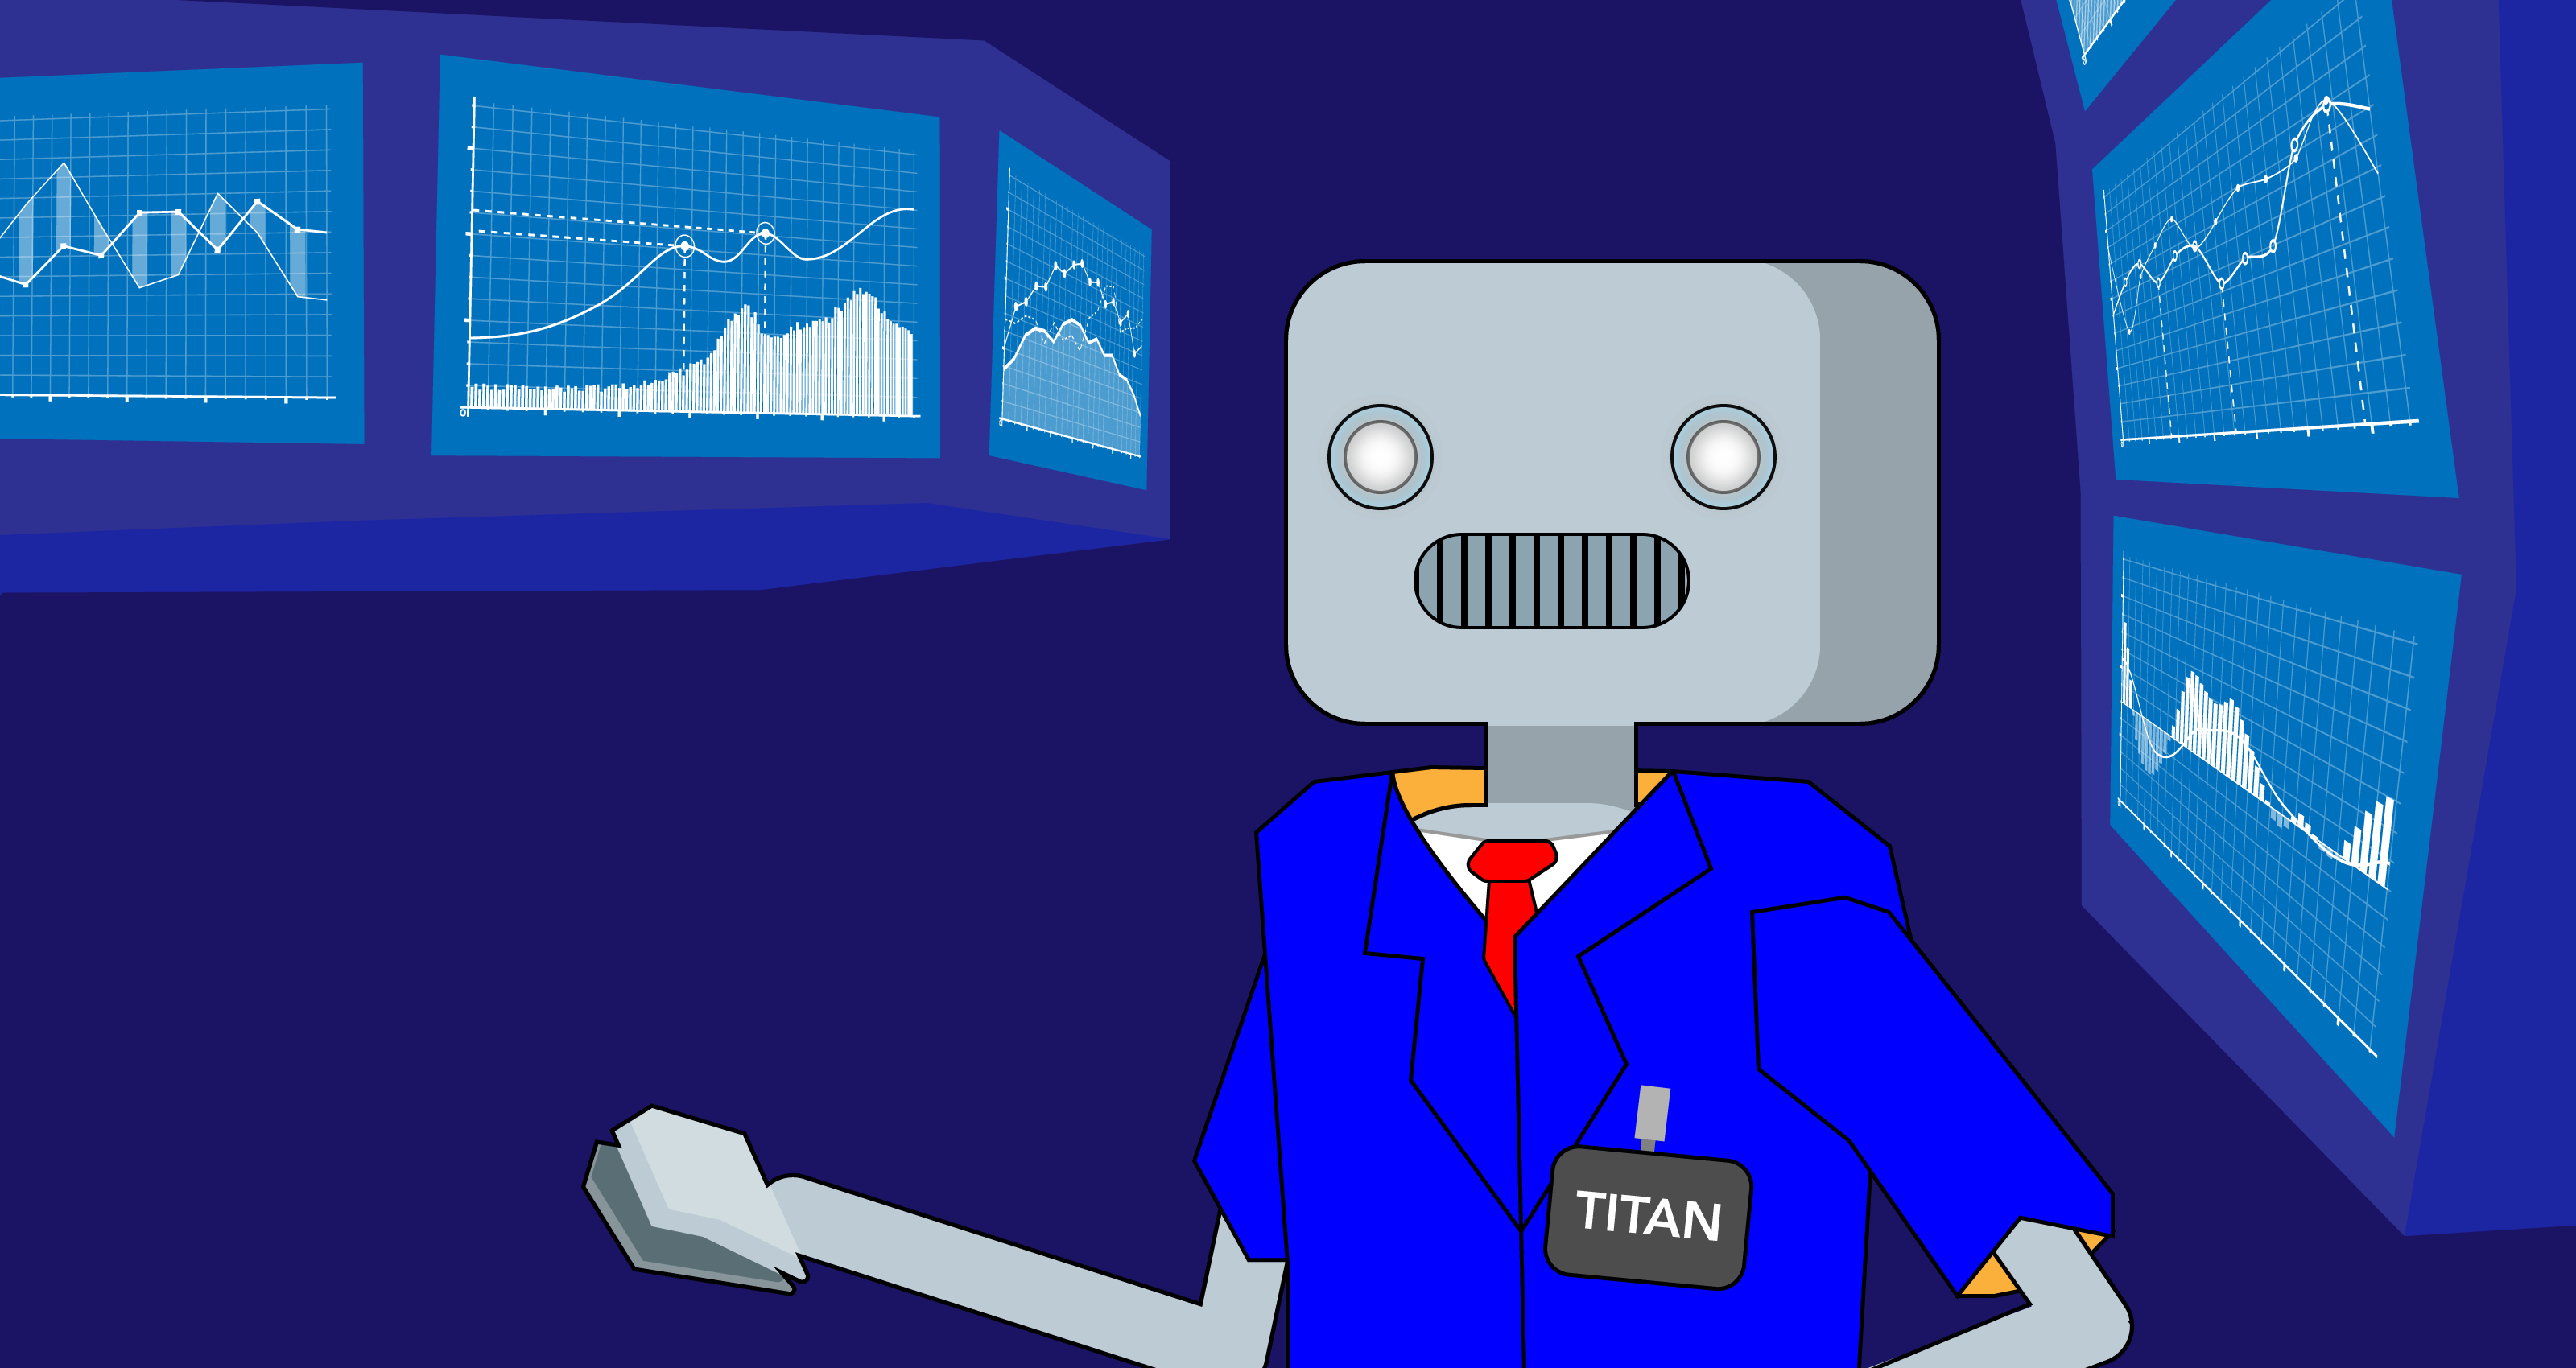 titan trading software